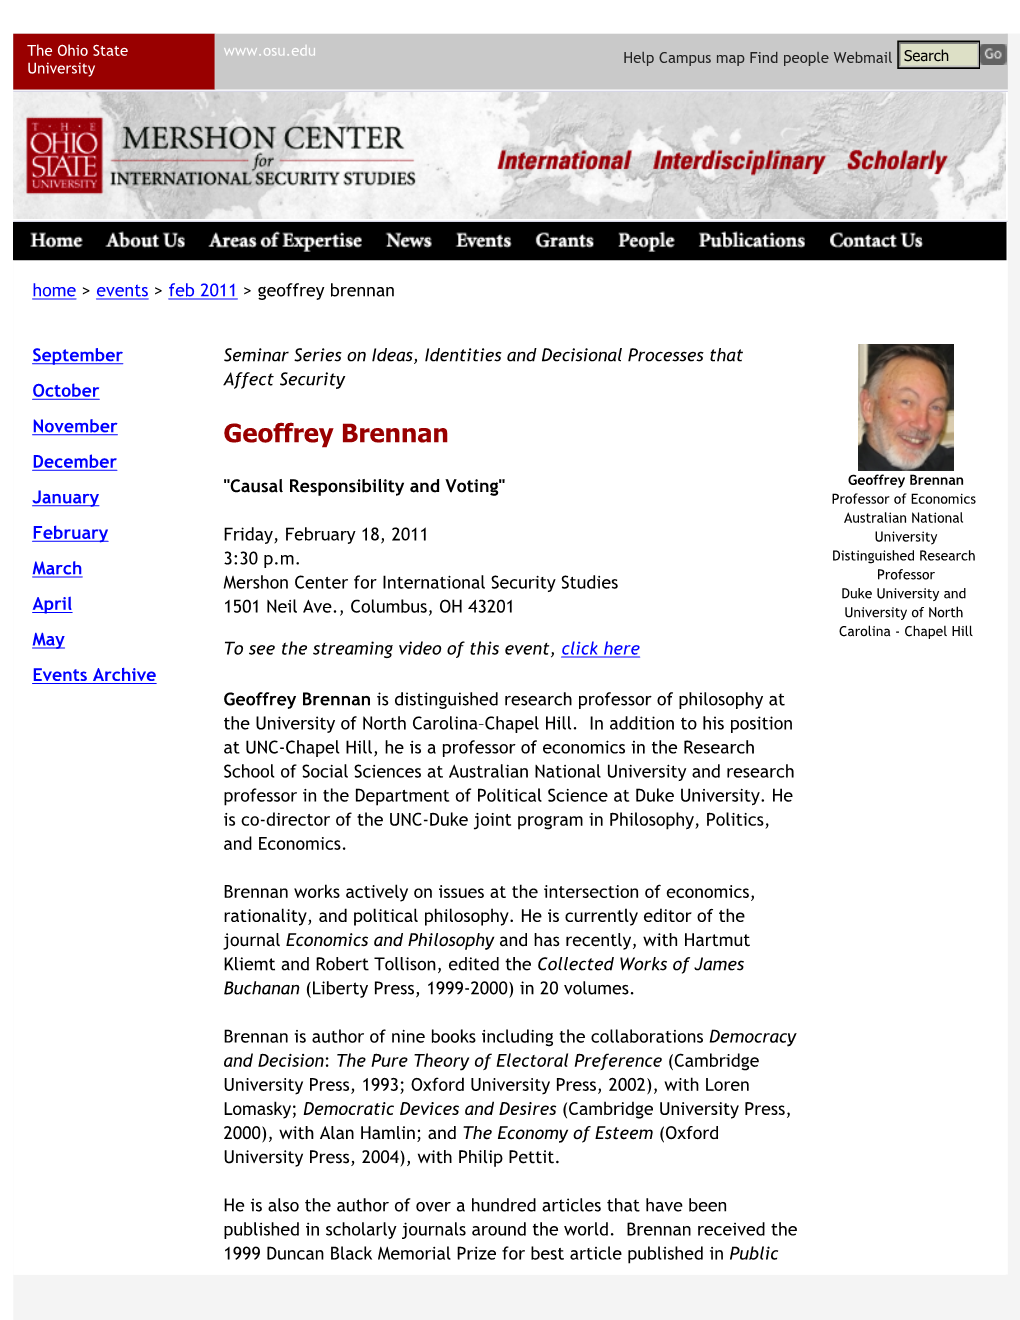 Geoffrey Brennan | Mershon Center for International Security Studies | the Ohio State University